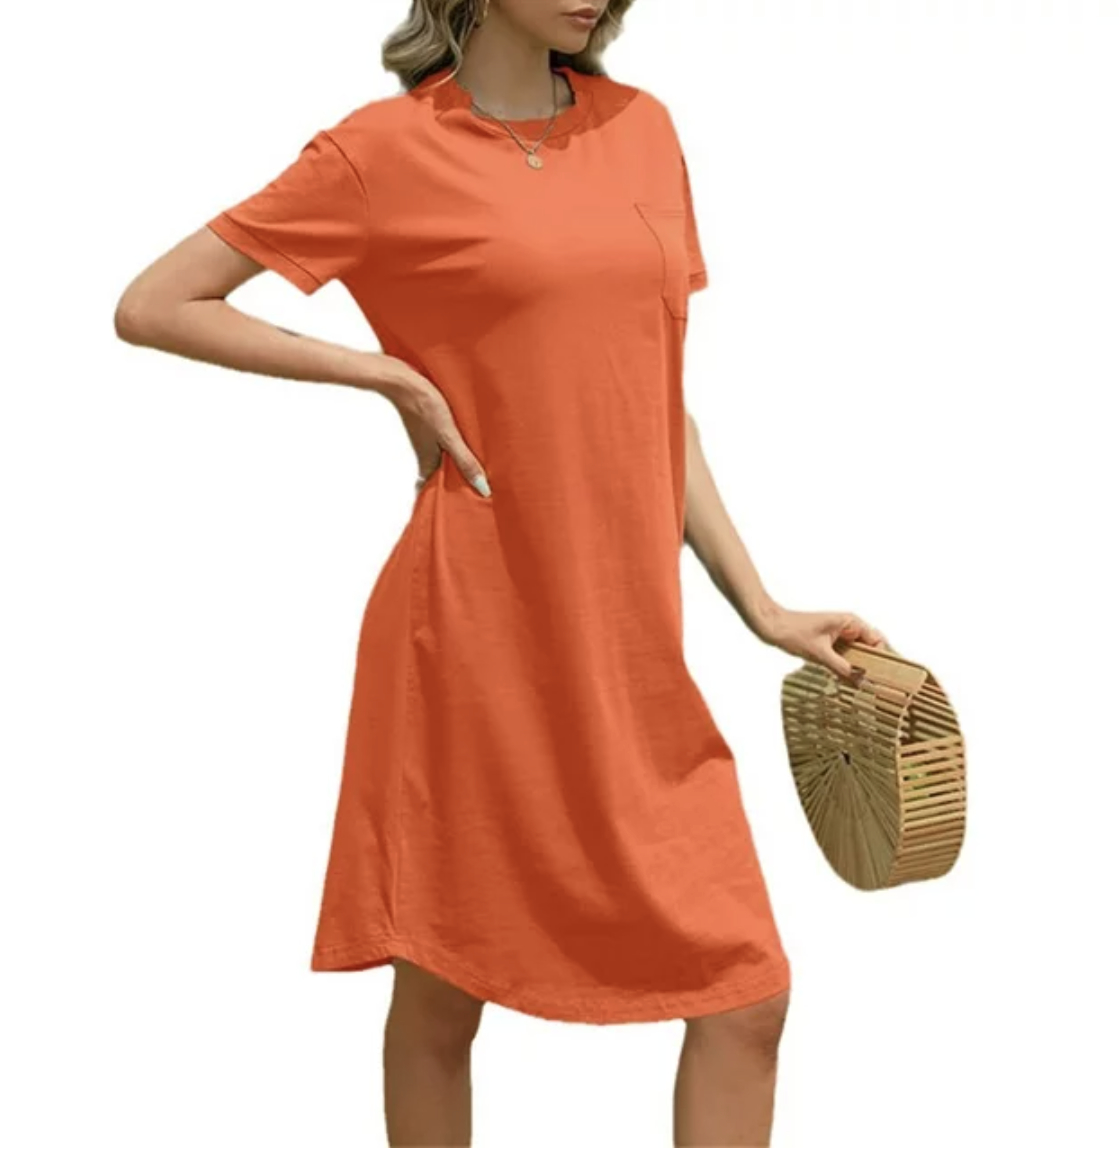 Model wearing orange T-shirt dress